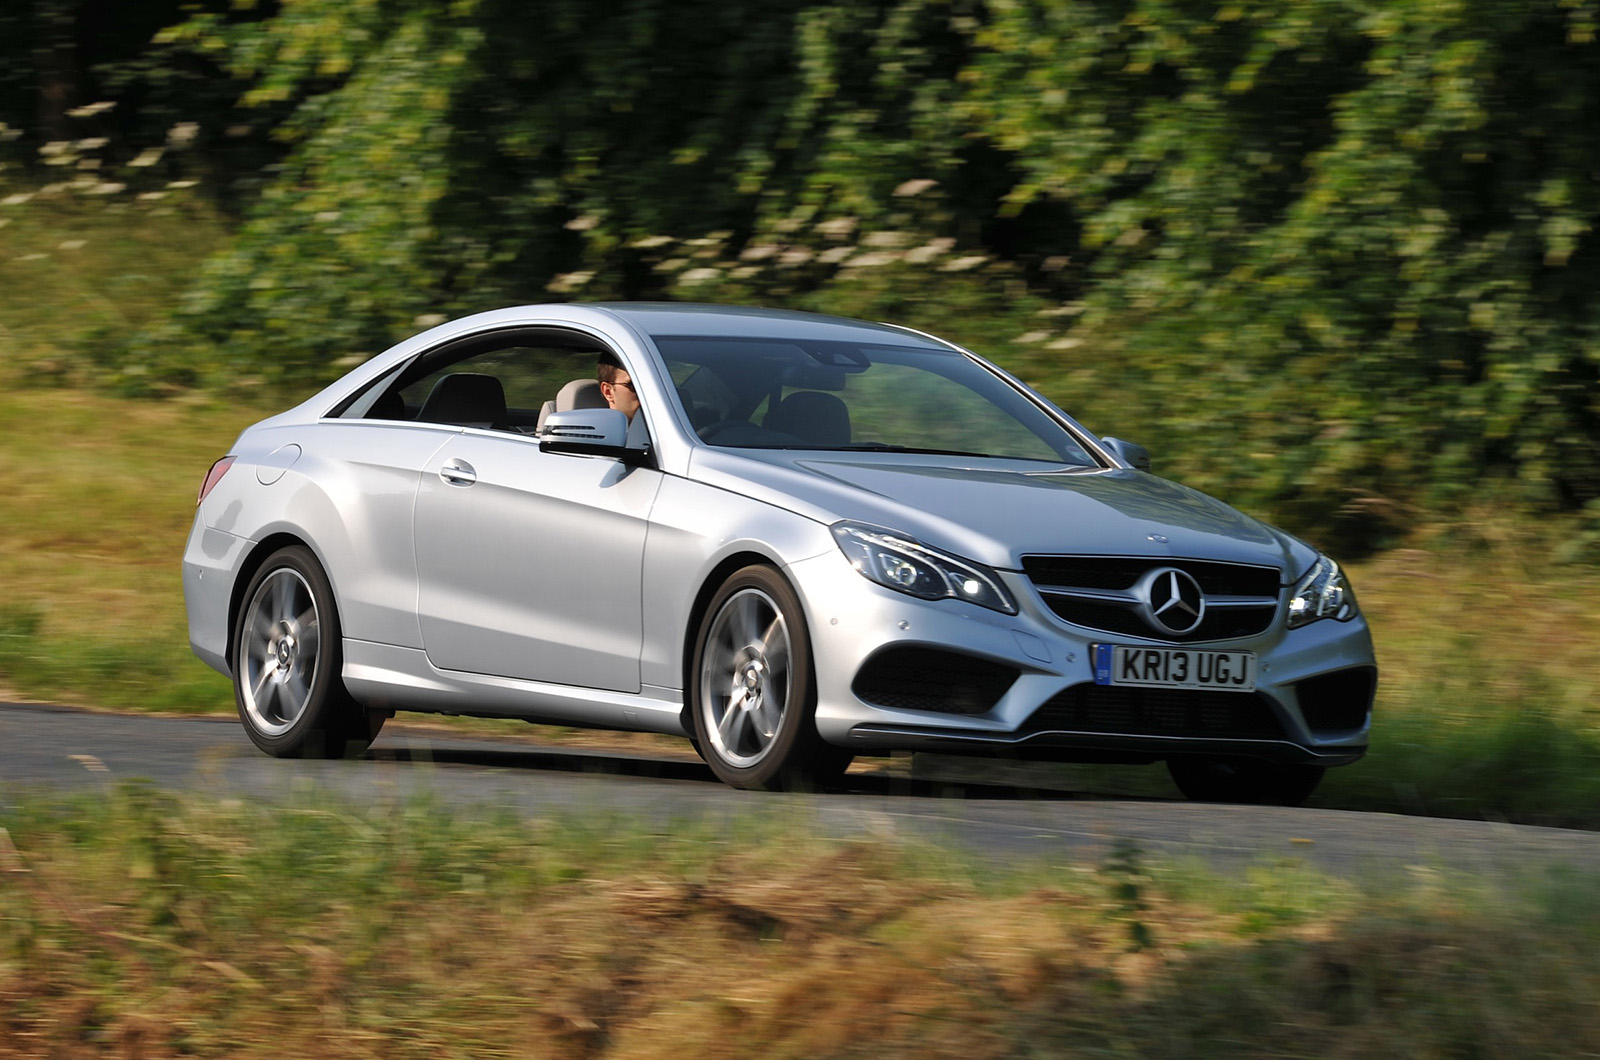 Mercedes benz e220 cdi sport review #5